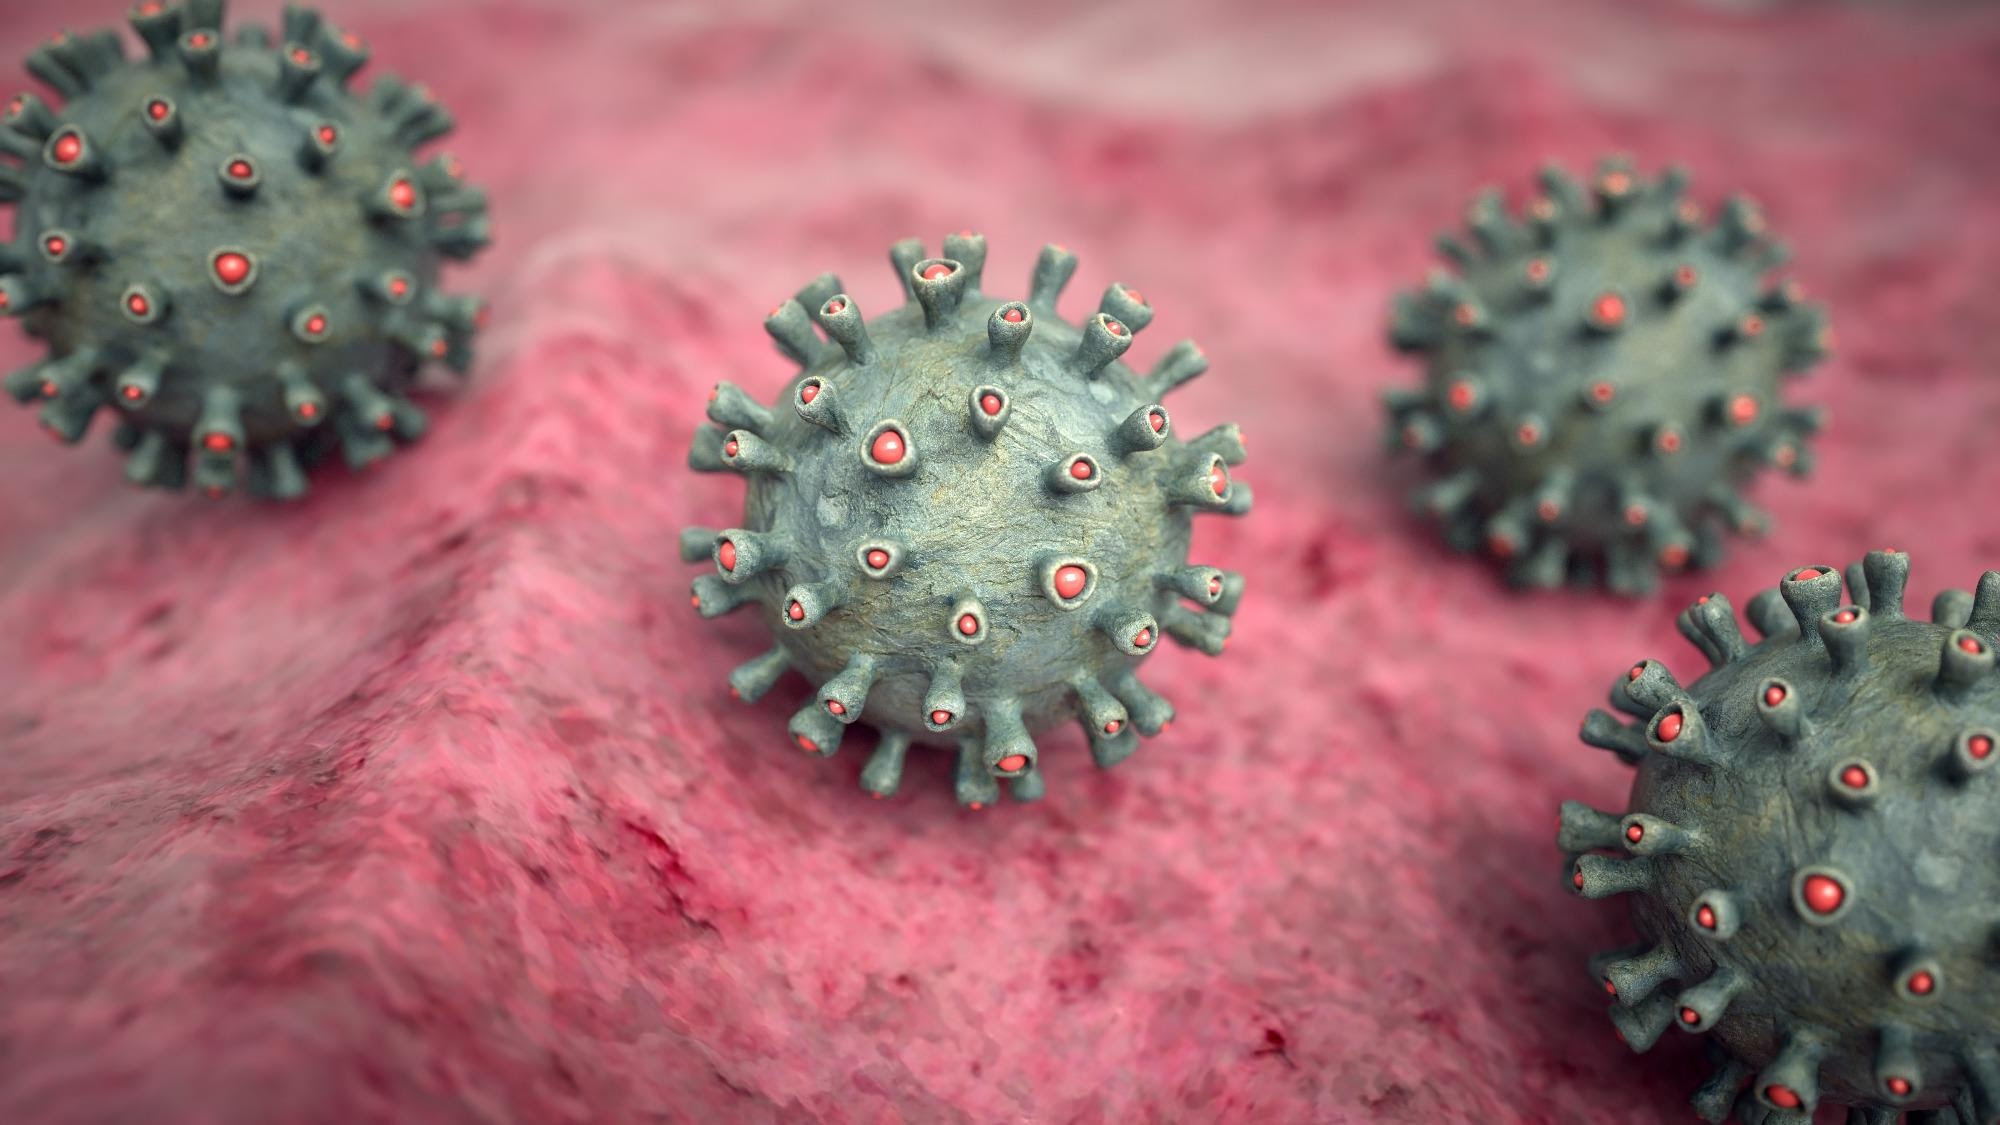 Scientists examine the impact of herpesviruses on (pre)diabetes